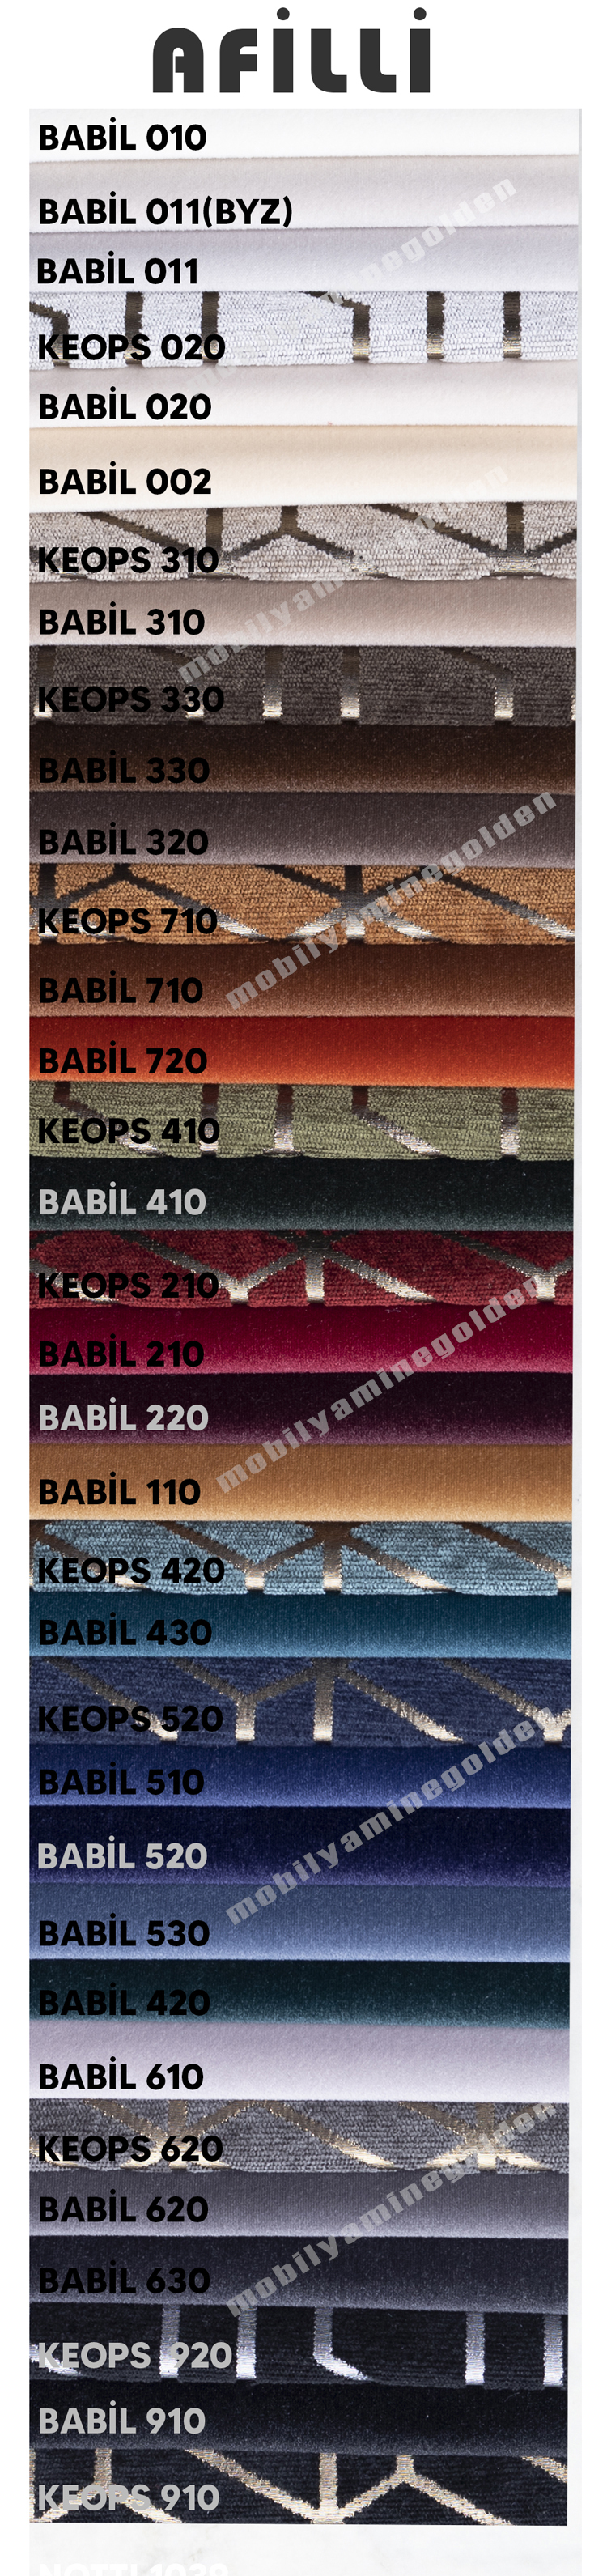 AFİLLİ-BABİL-KEOPS-2022 yazılı.jpg (1.76 MB)